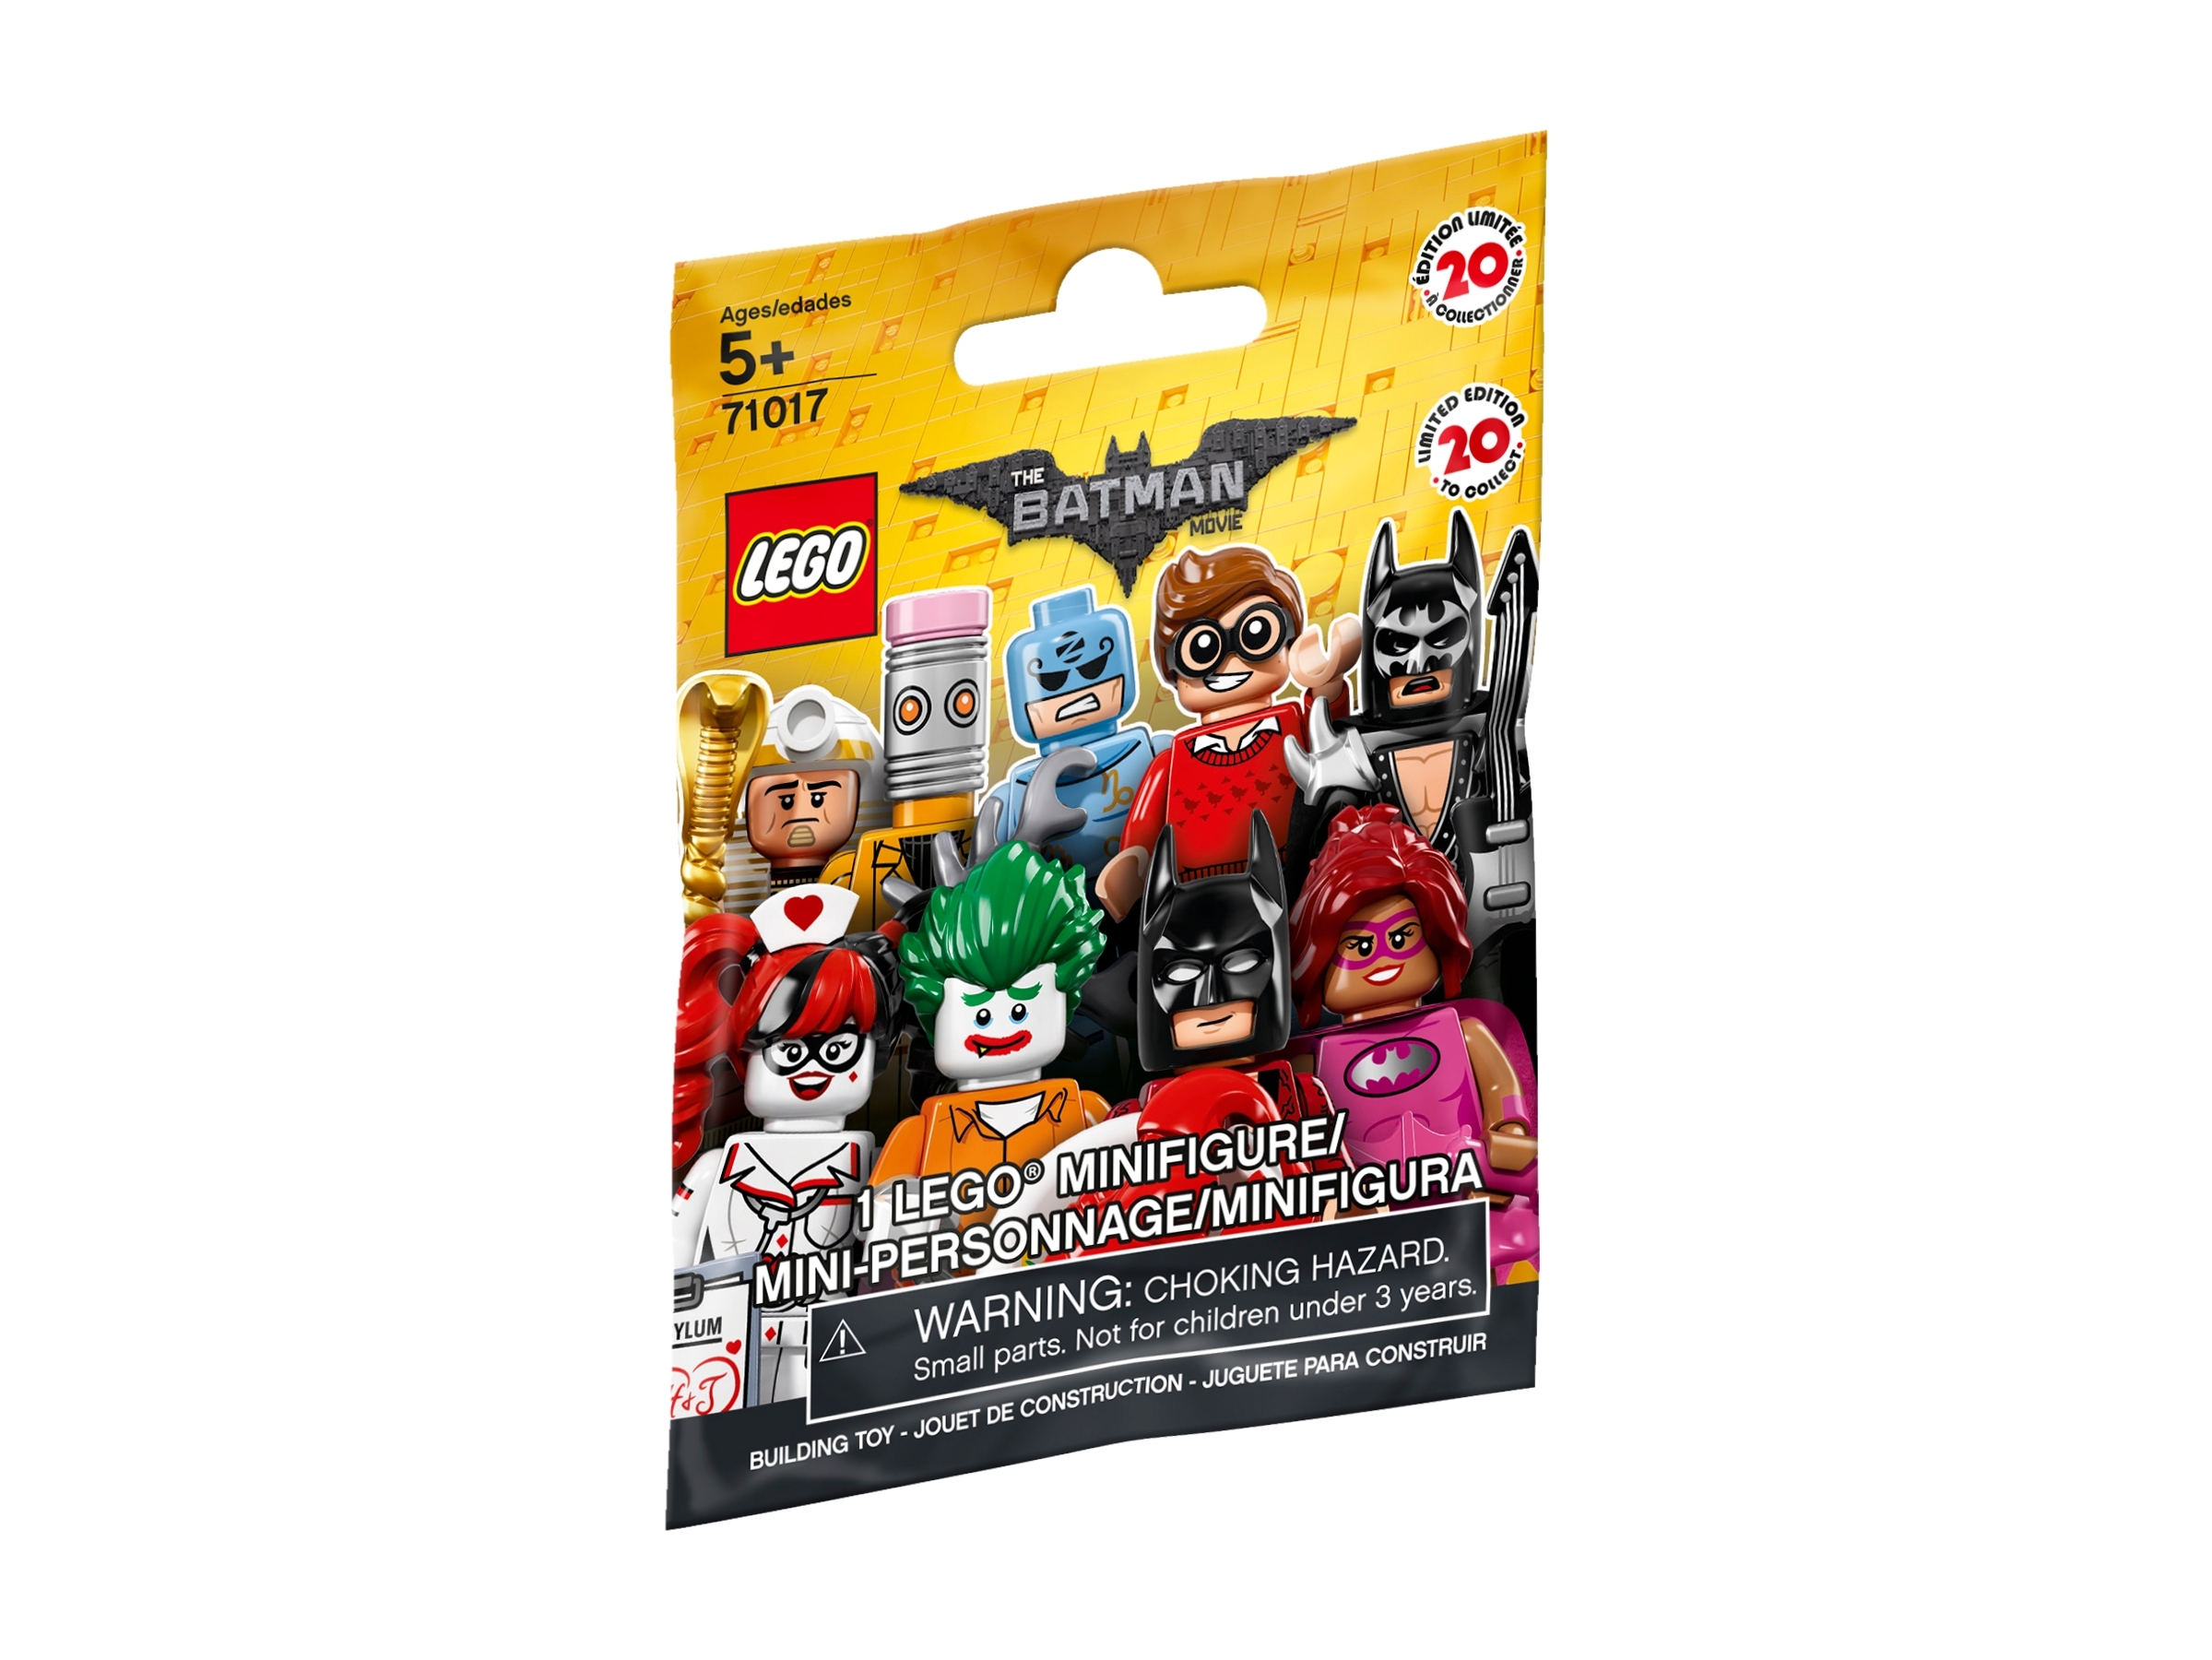 LEGO THE MIME BATMAN MOVIE MINIFIGURES SERIES 71017 NEW PACK #20 ORIGINAL LOW $ 